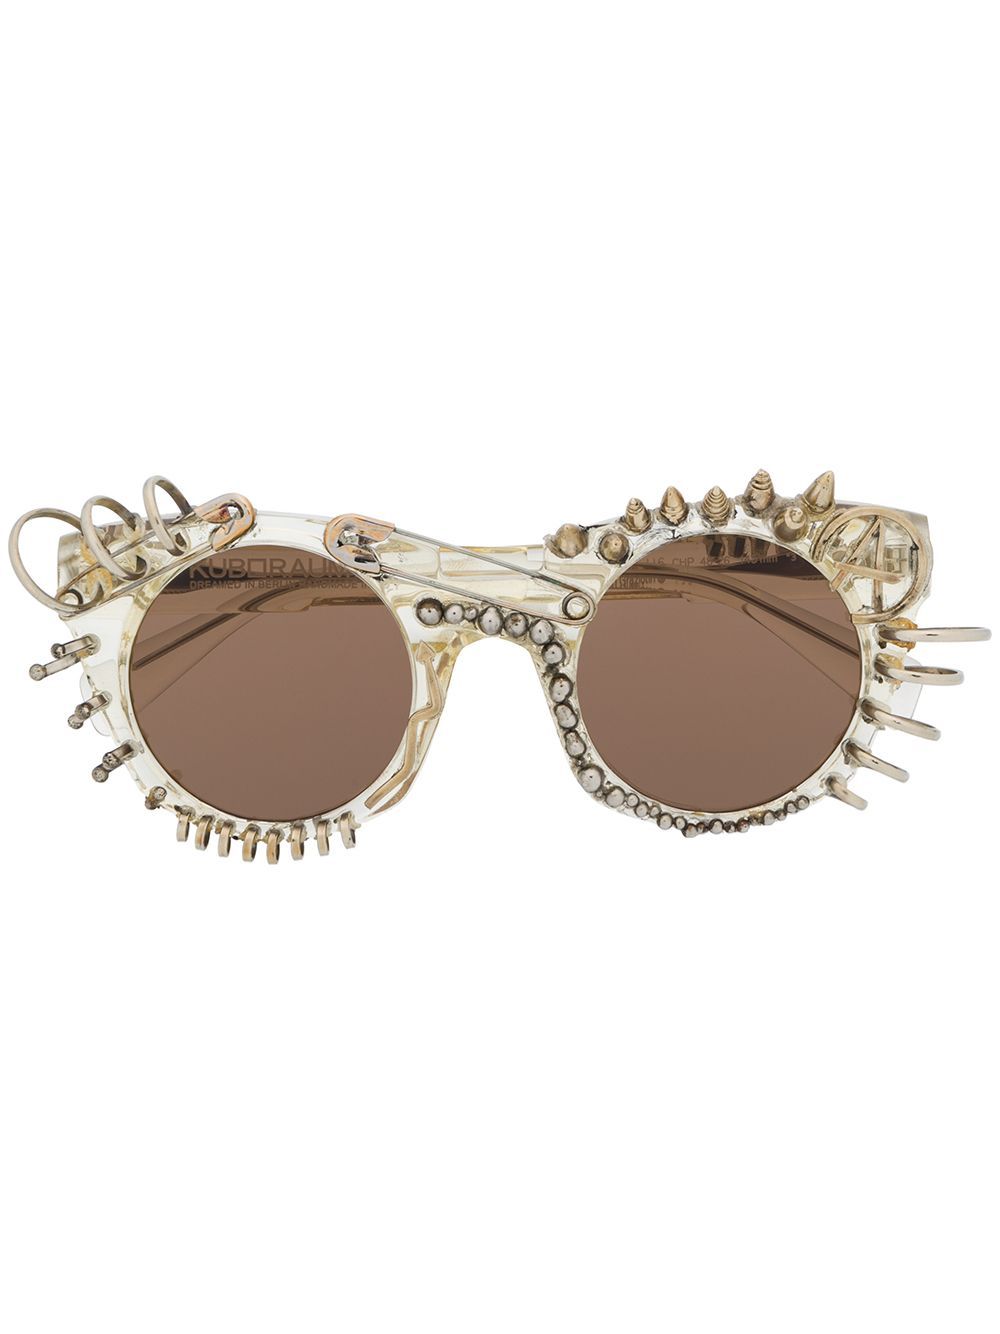 Cool Embellished Sunglasses